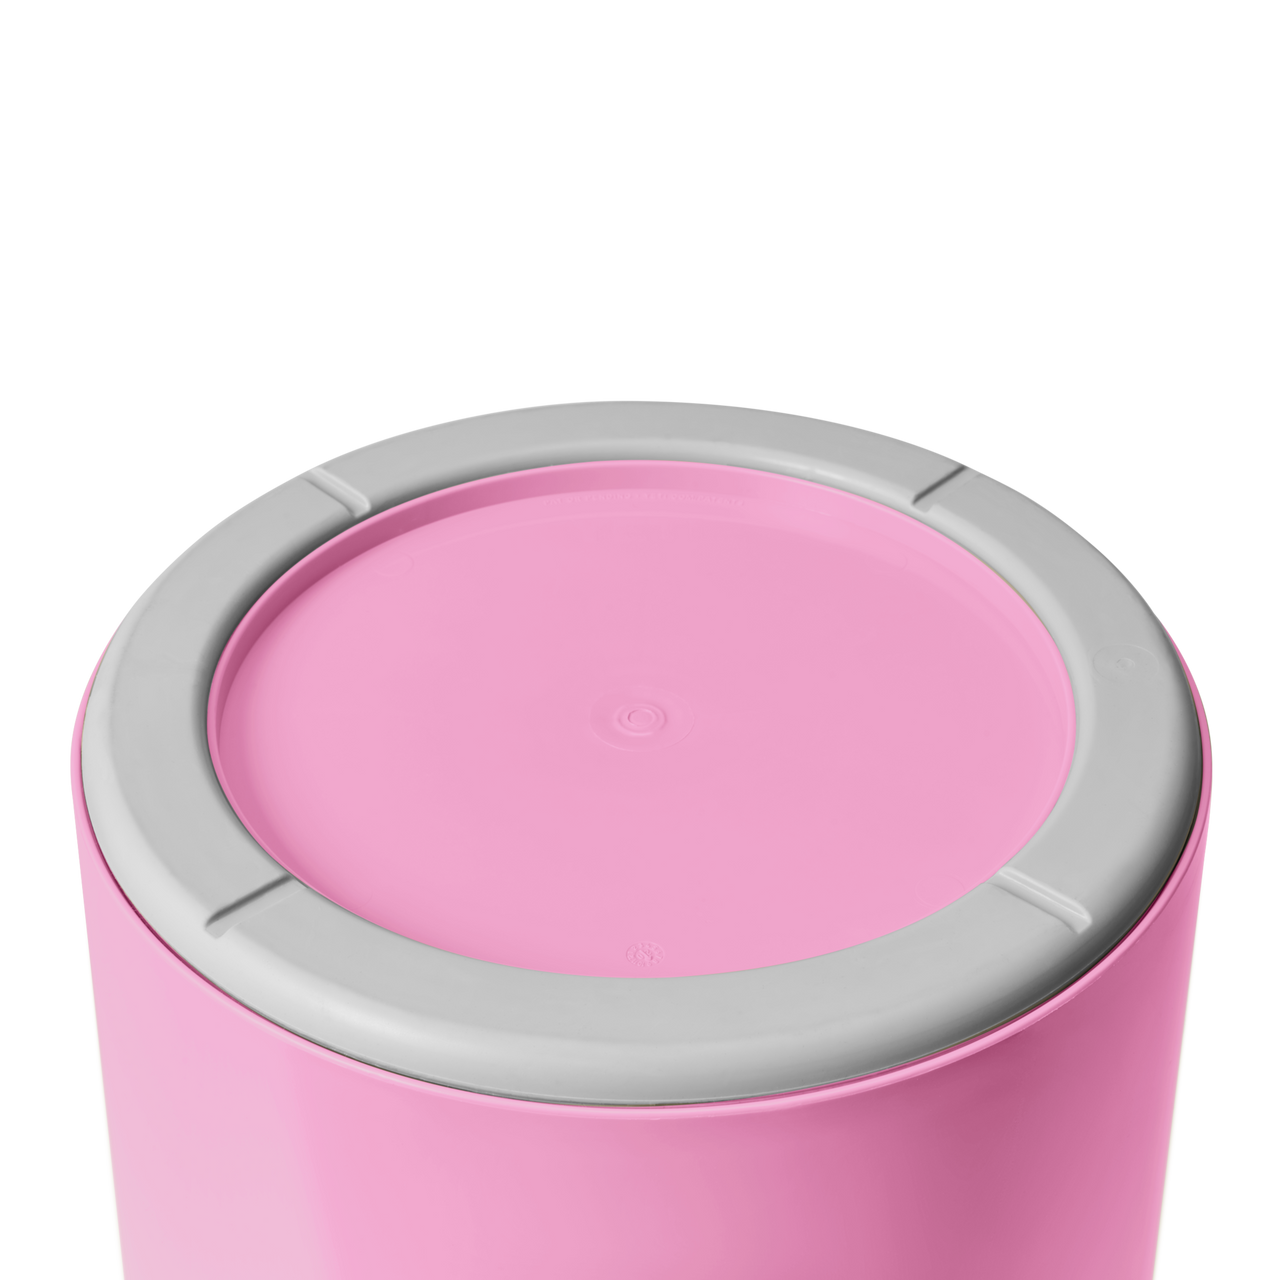 YETI LoadOut Bucket Power Pink - Backcountry & Beyond